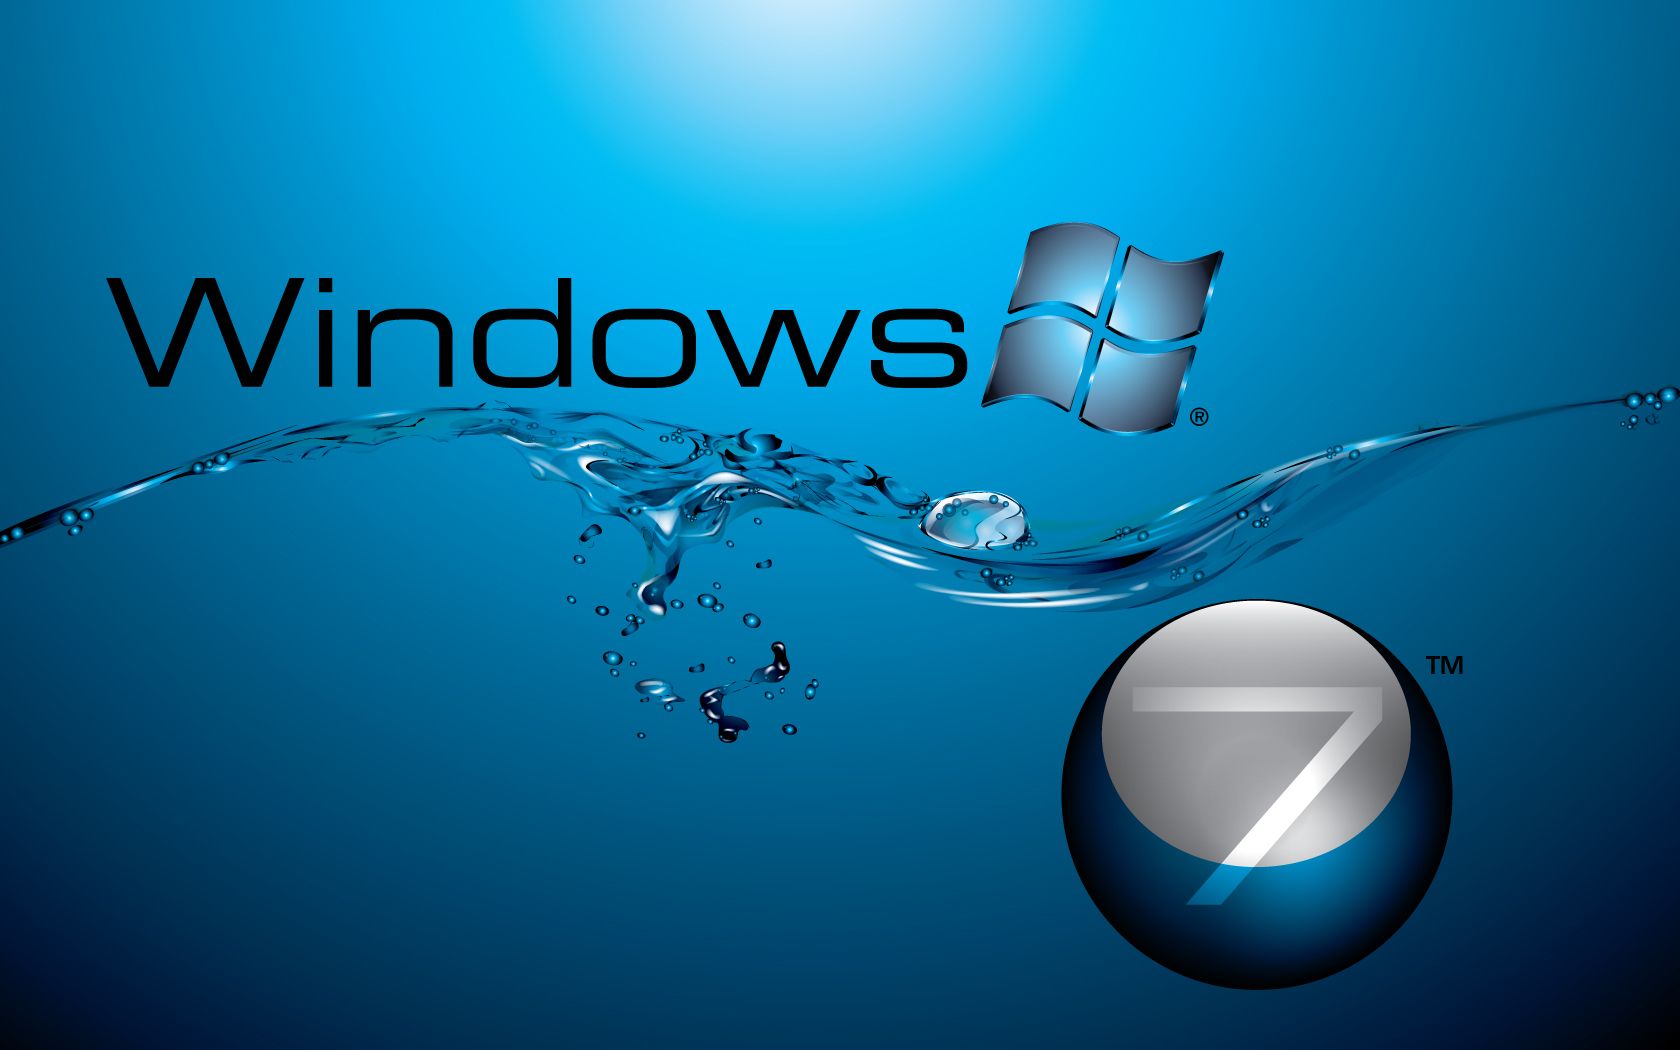 Windows 7 in Water Flow Wallpapers HD Backgrounds